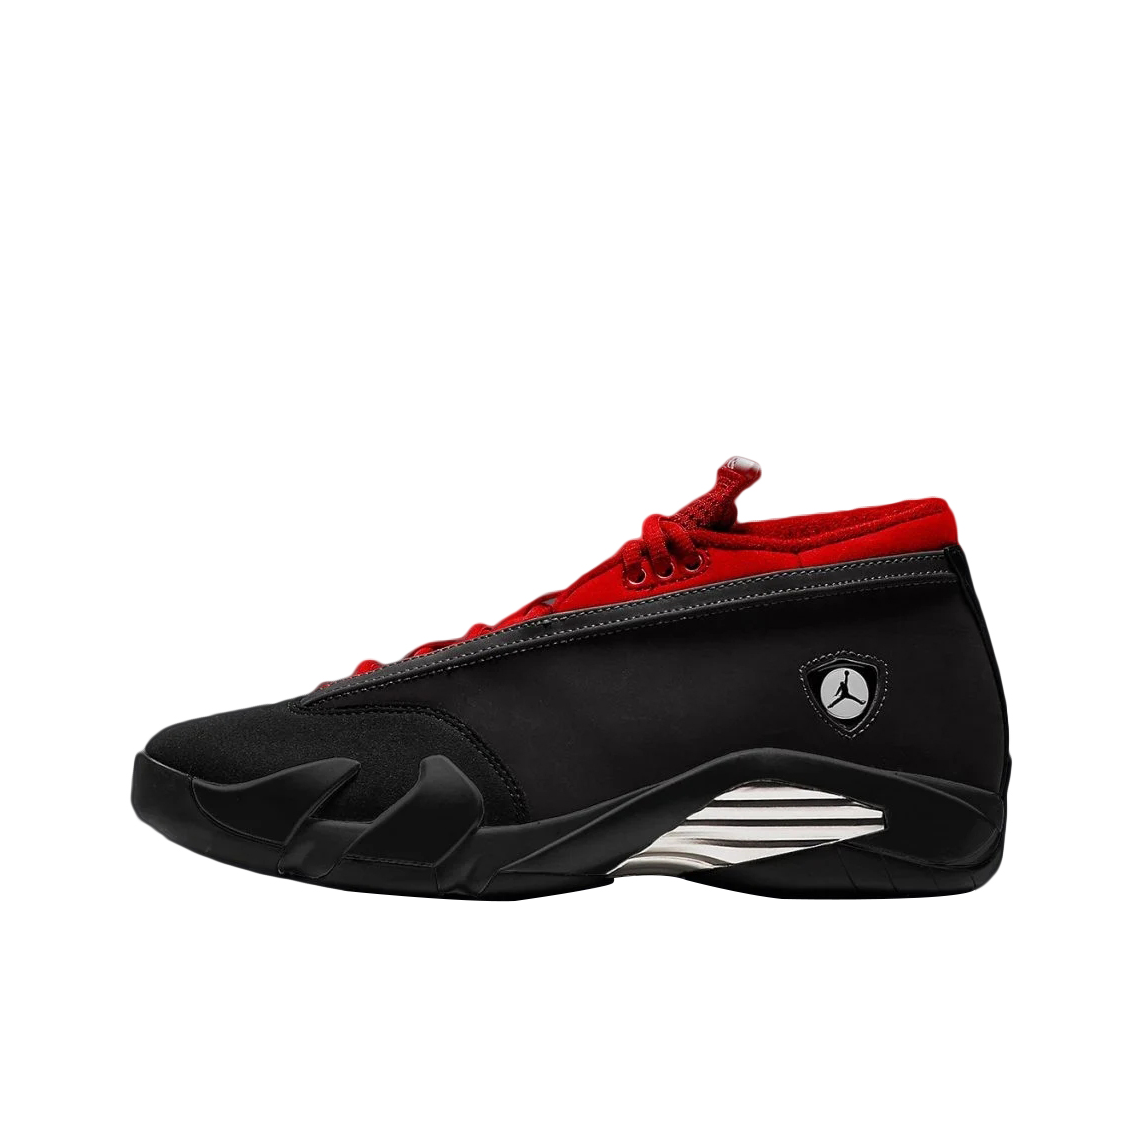 Air Jordan 14 黑色/红色/金属银